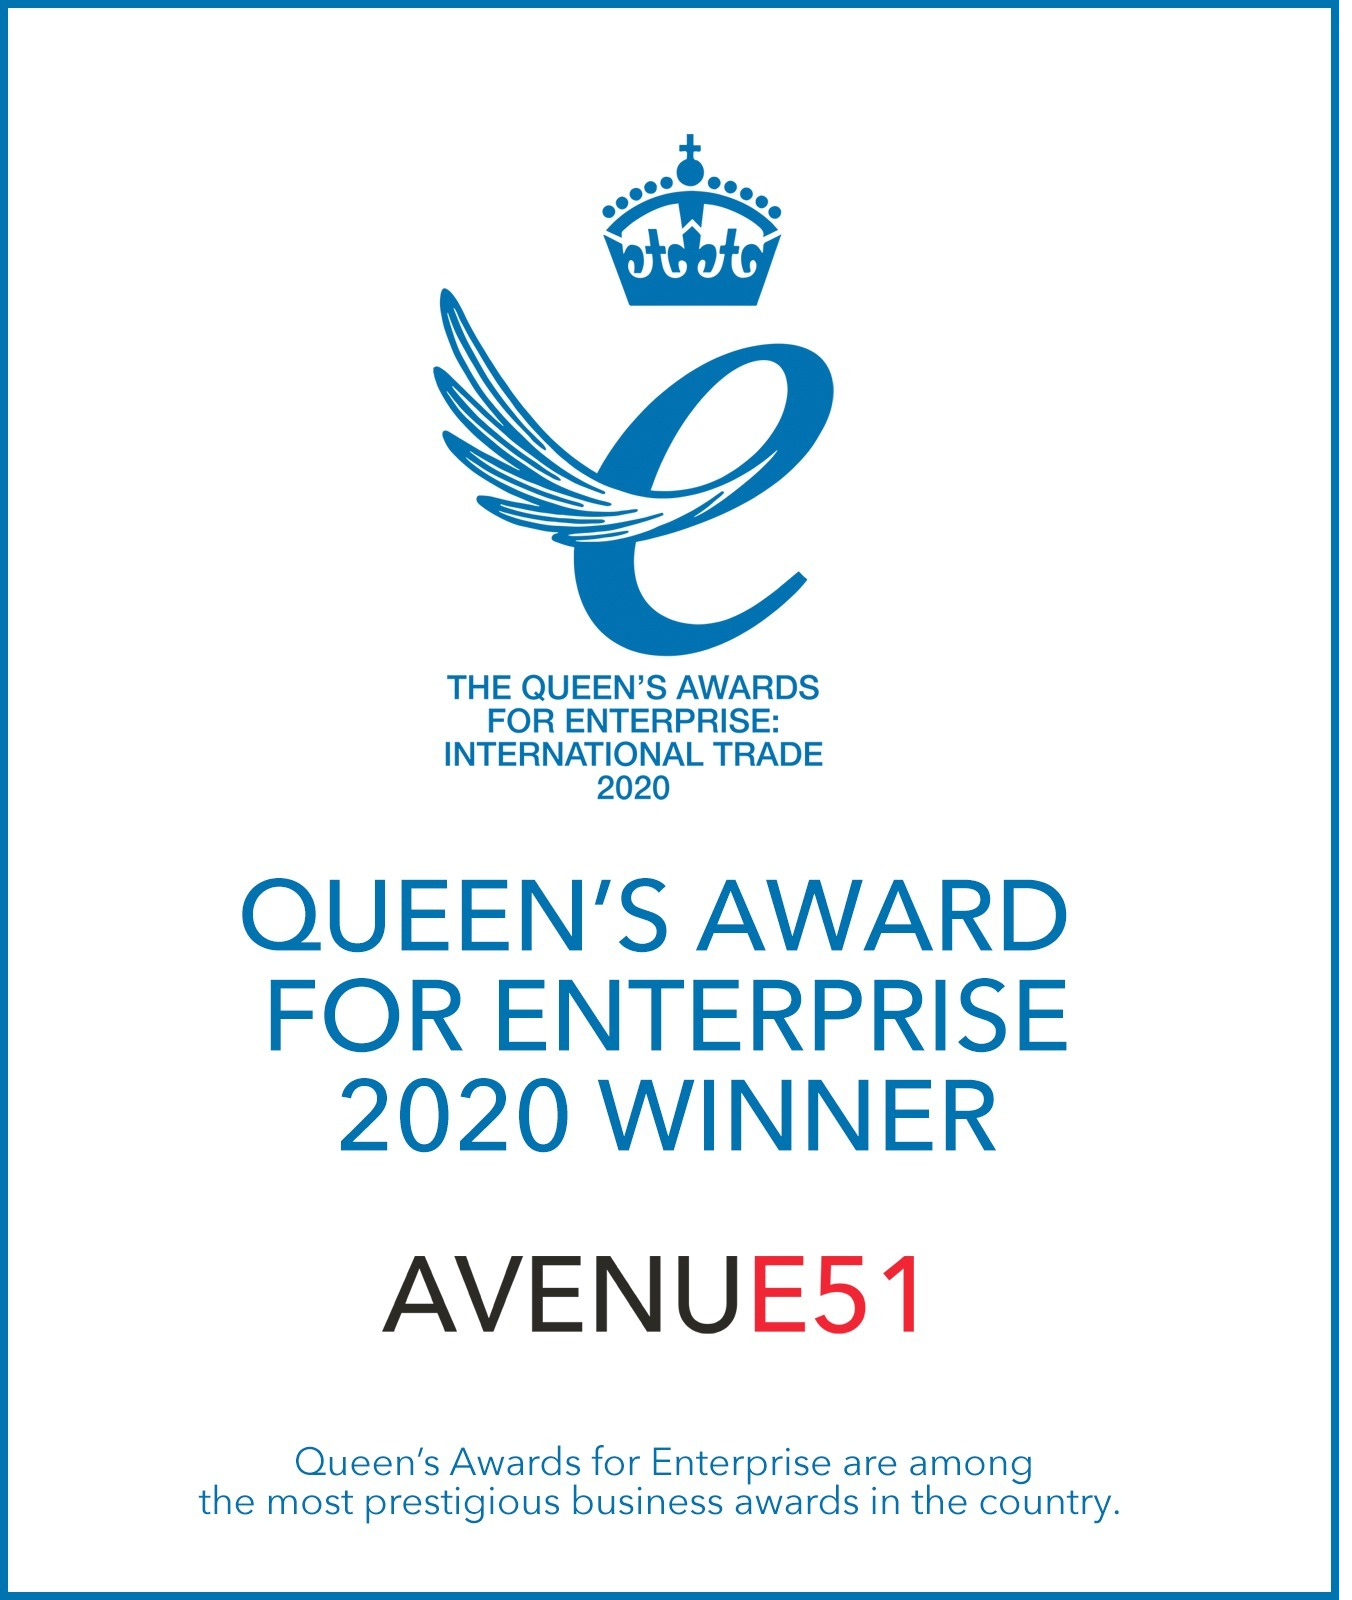 Avenue51 Wins Queen’s Award for Enterprise, International Trade